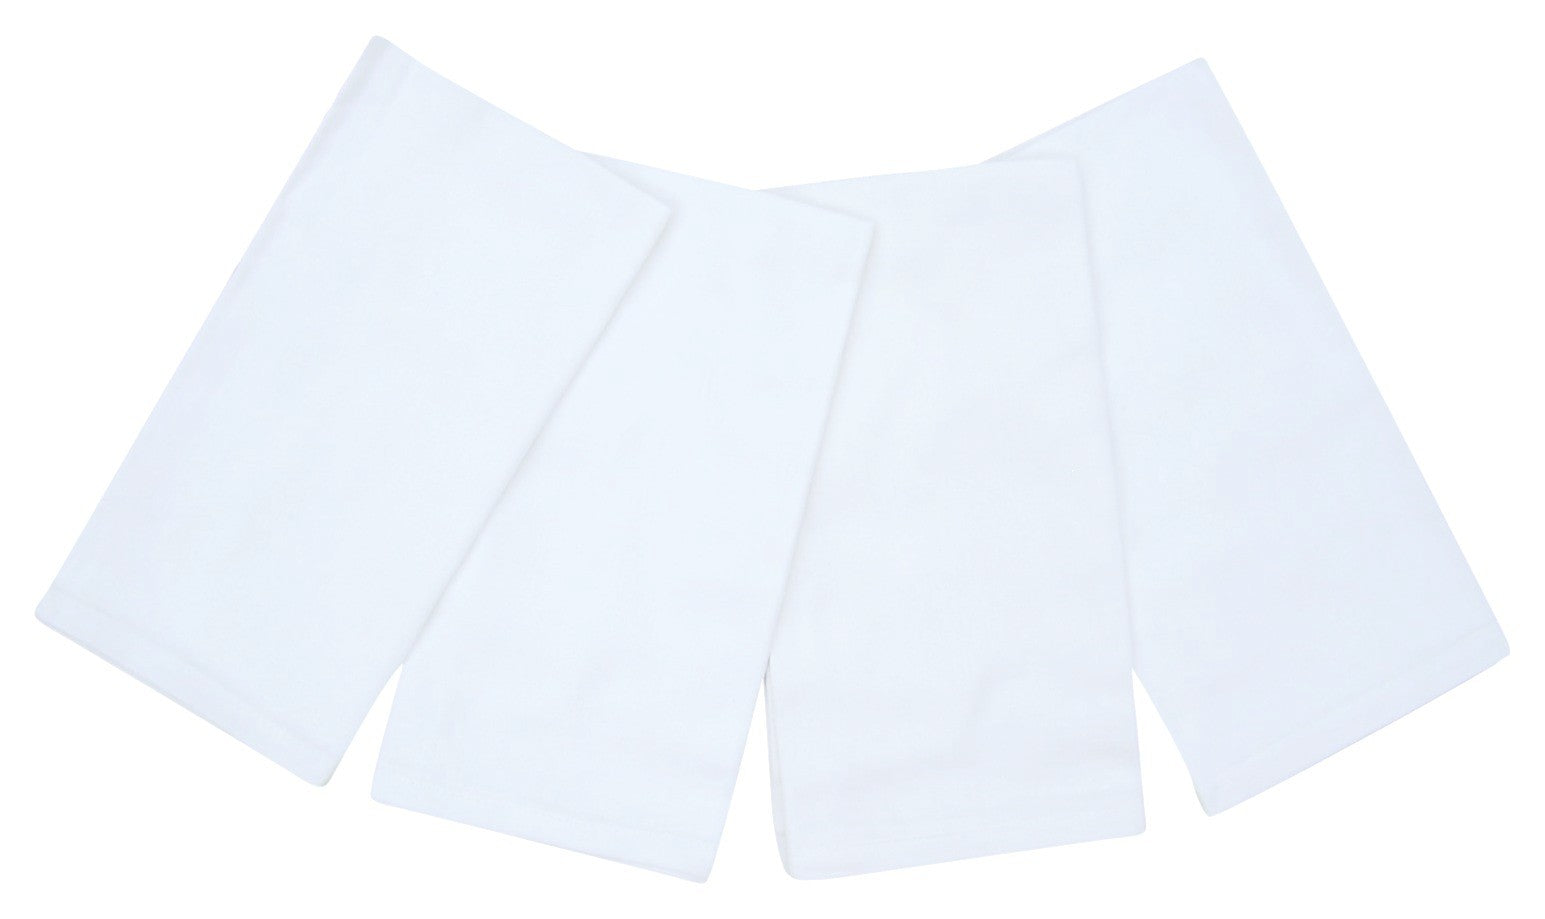 100% Cotton Napkins 20" x 20" Set of 4 Bright White 